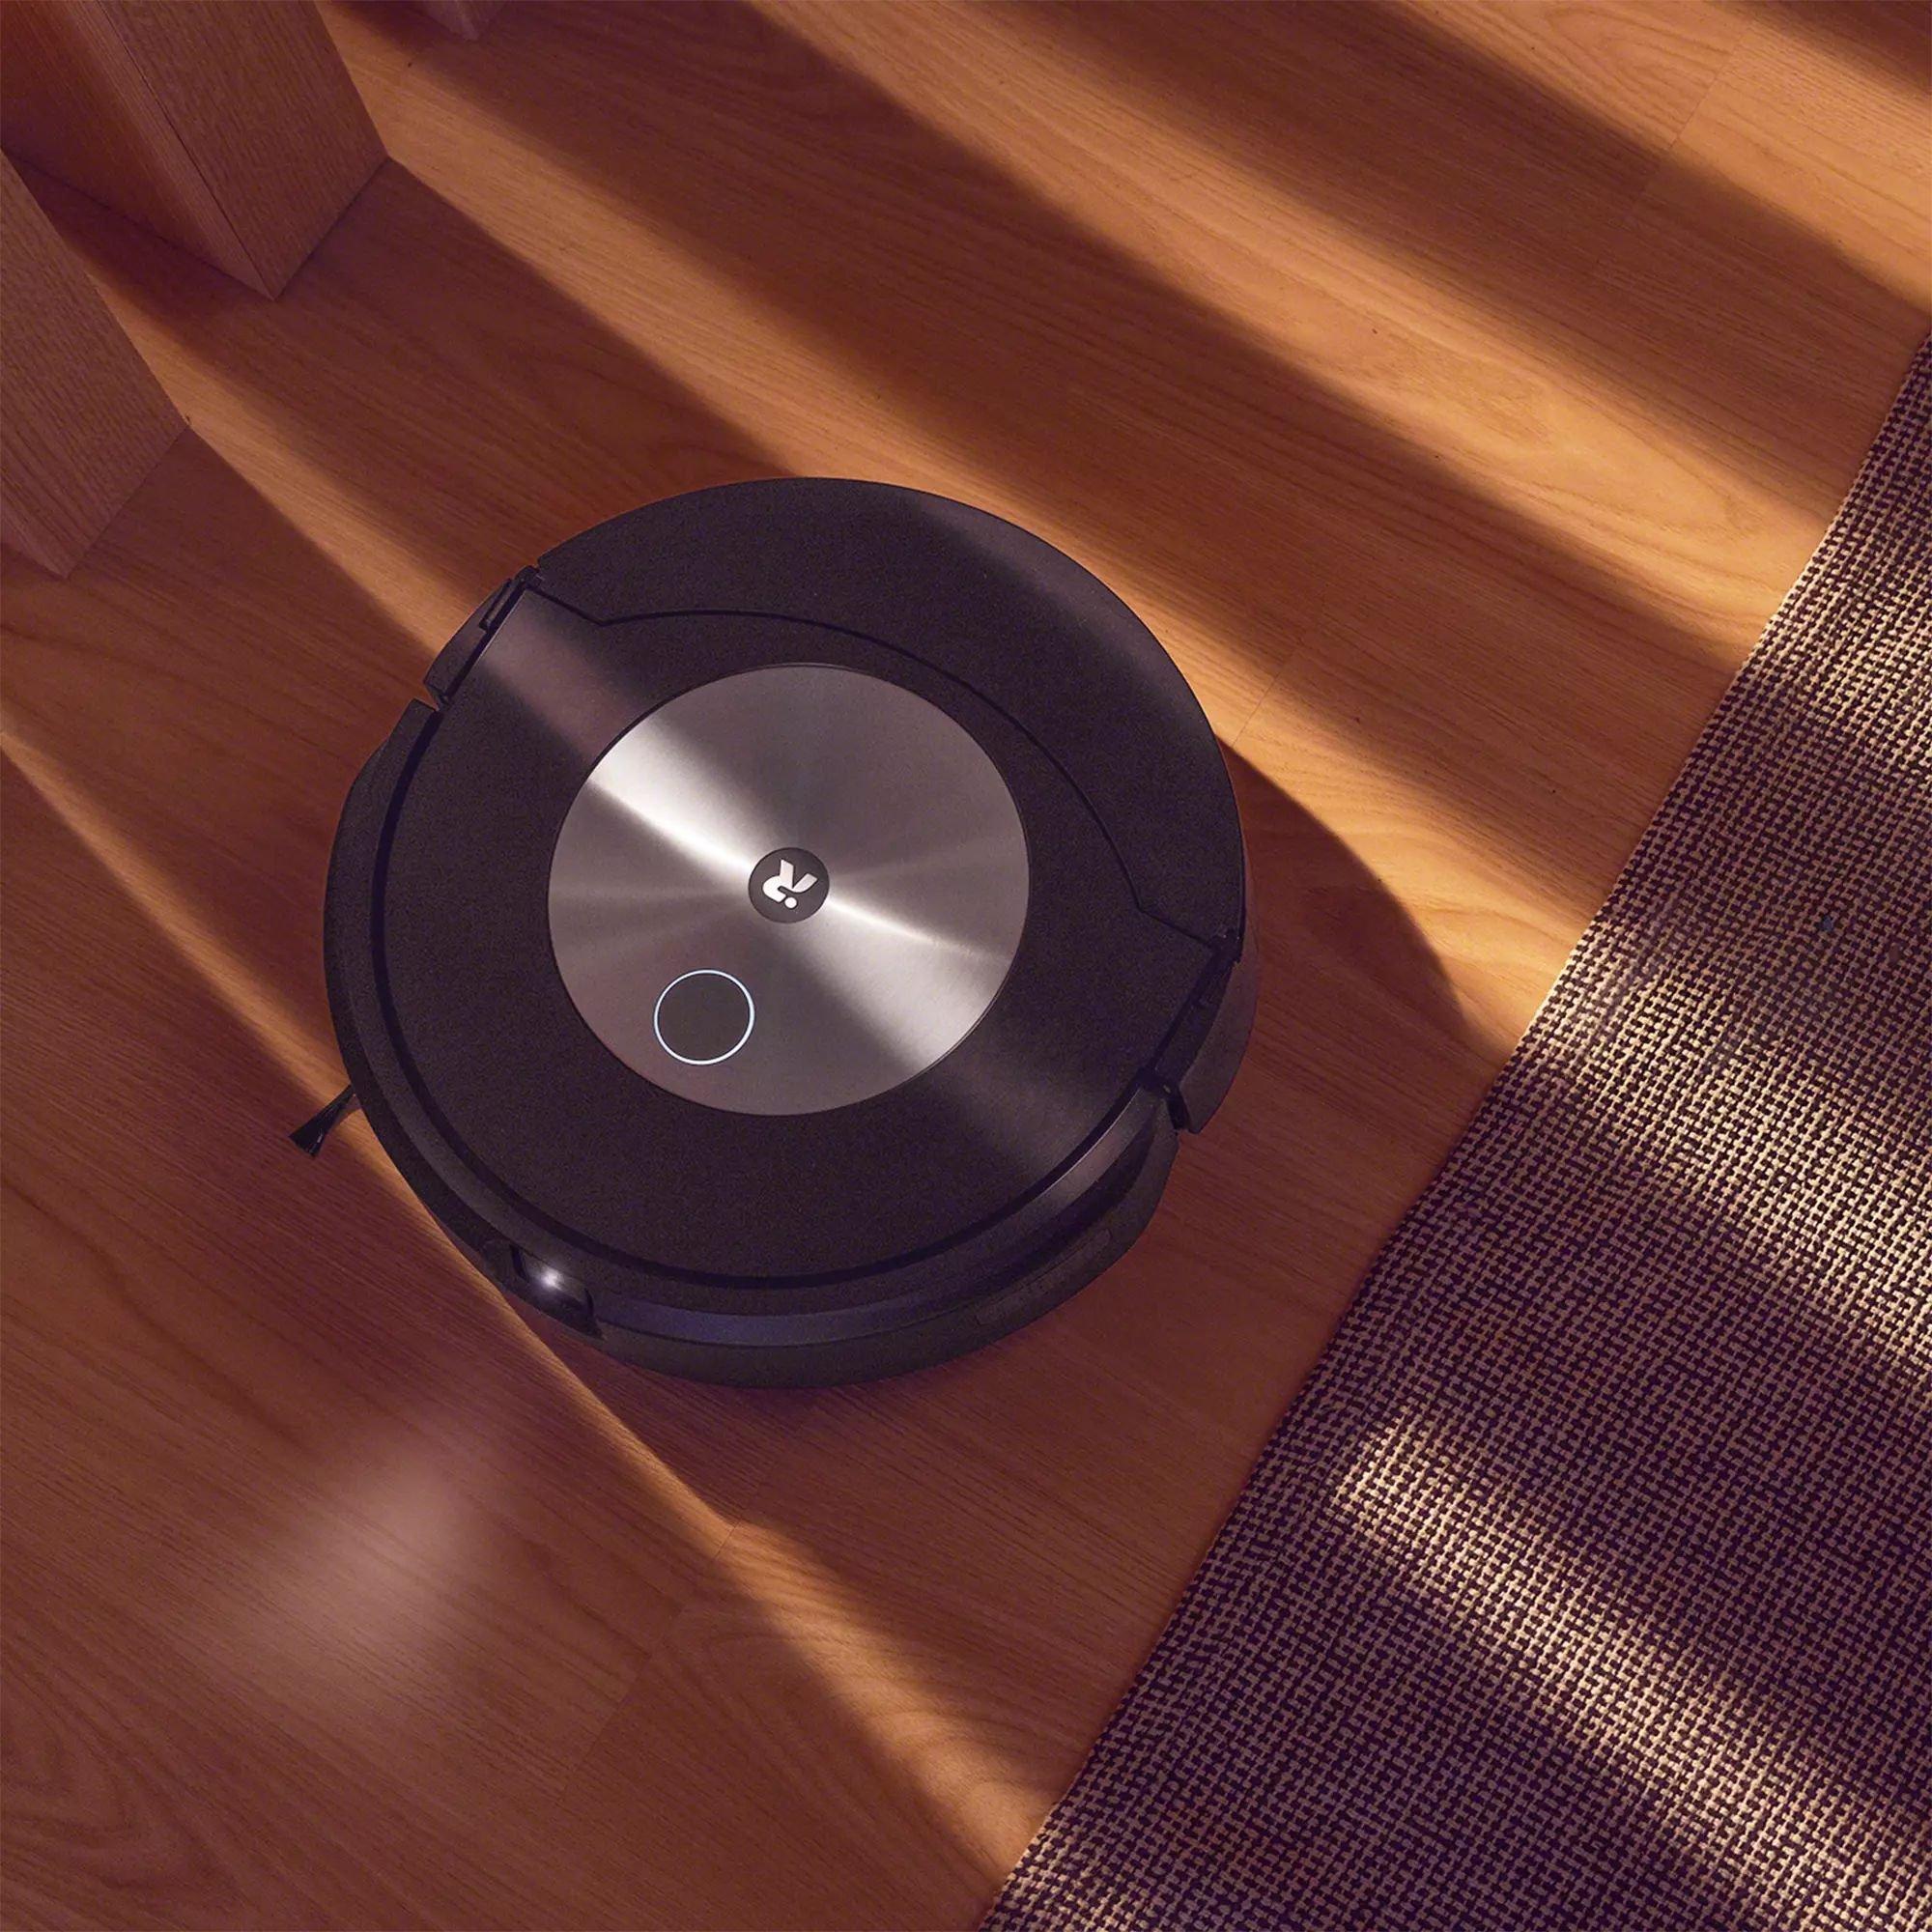 Robot aspirador y friegasuelos iRobot Roomba Combo™ i8